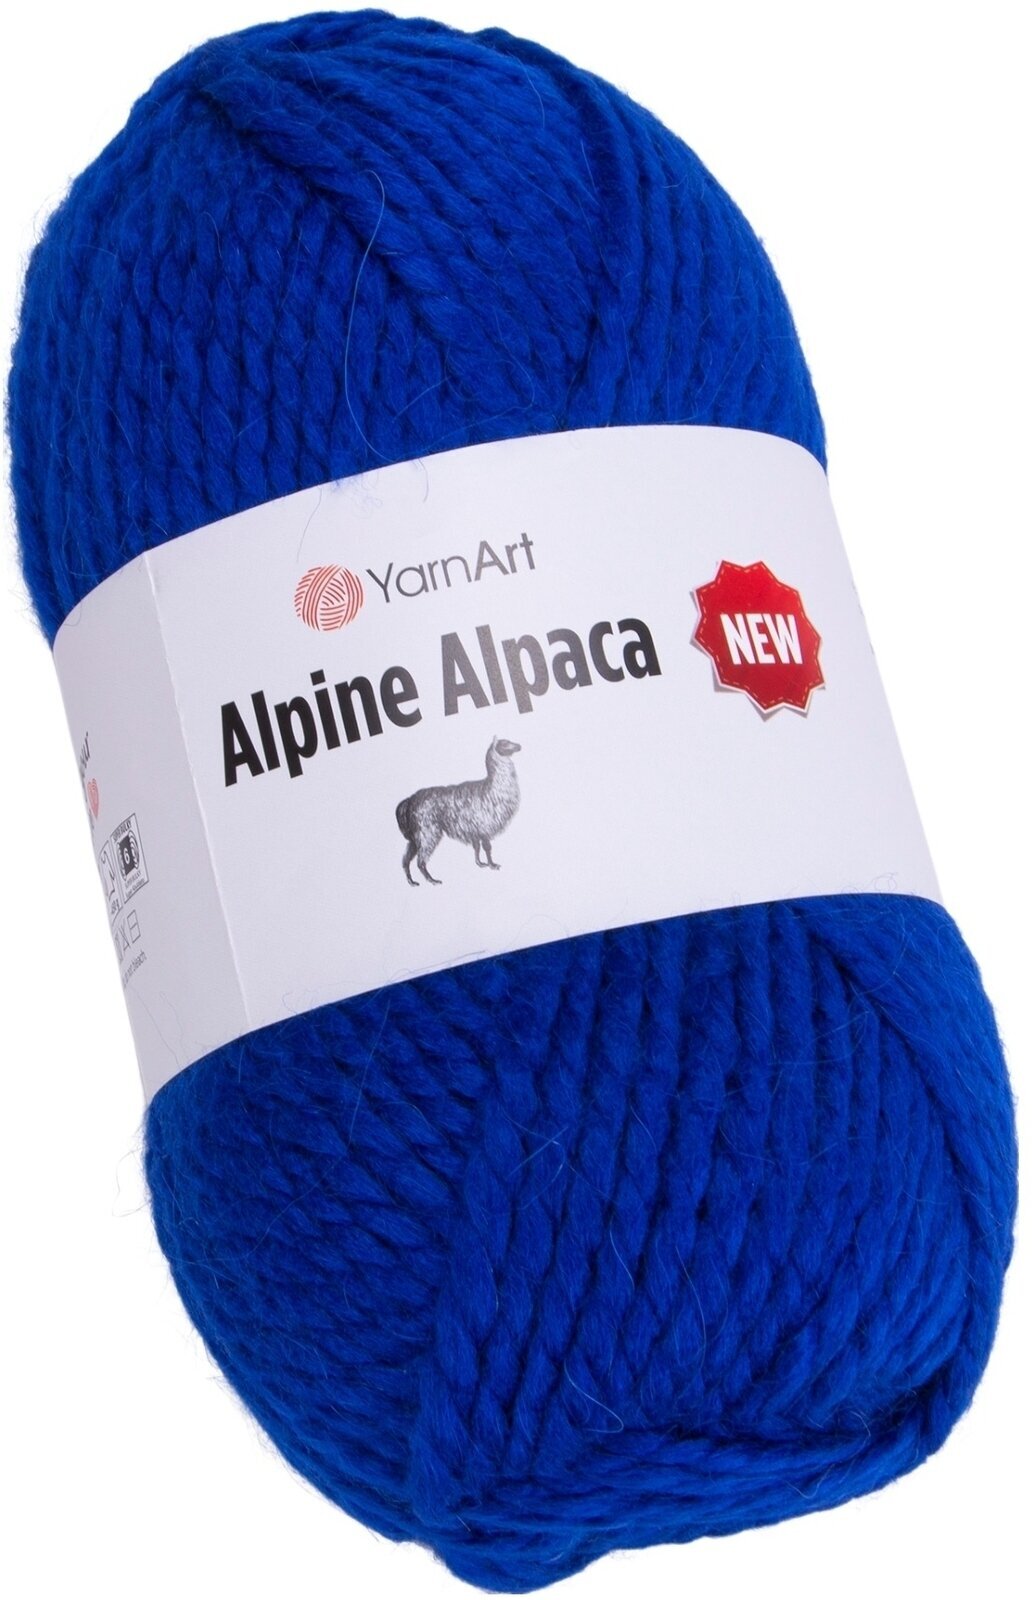 Knitting Yarn Yarn Art Alpine Alpaca 1442